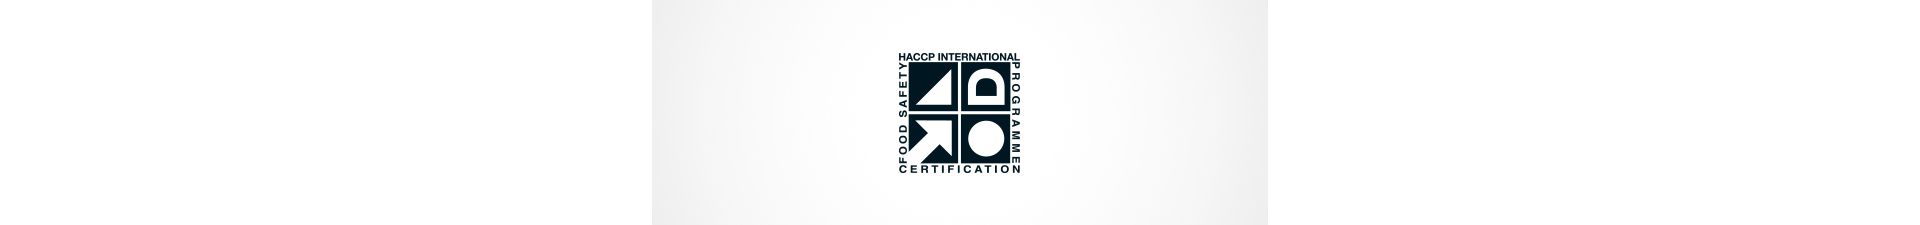 HACCP logó